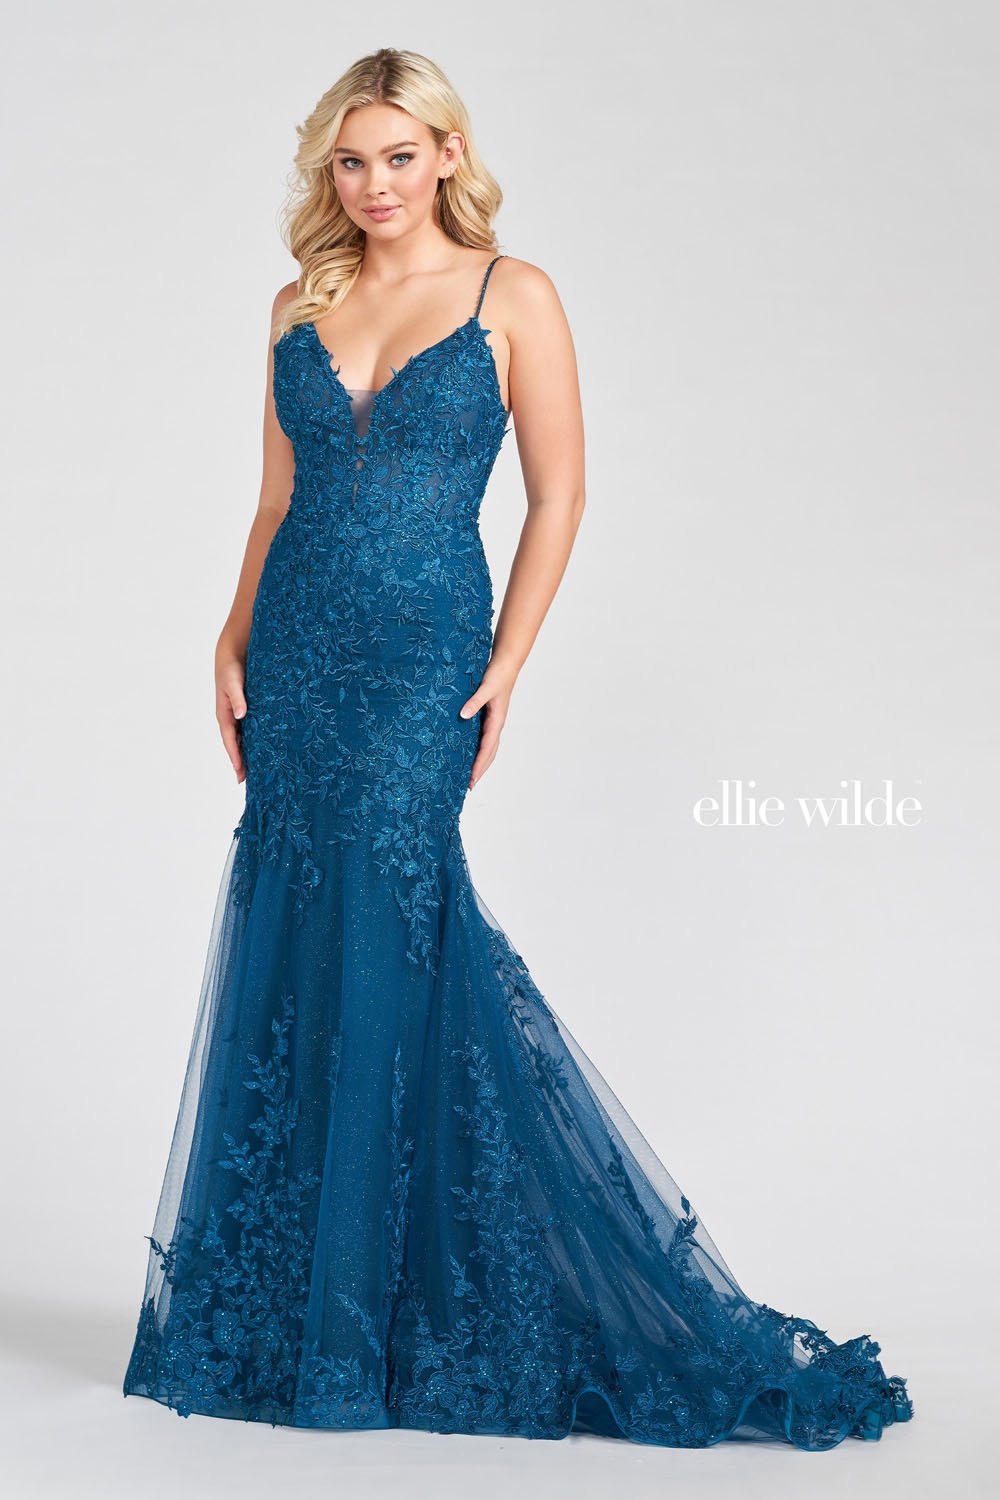 Ellie Wilde Teal EW122103 Prom Dress Image.  Teal formal dress.